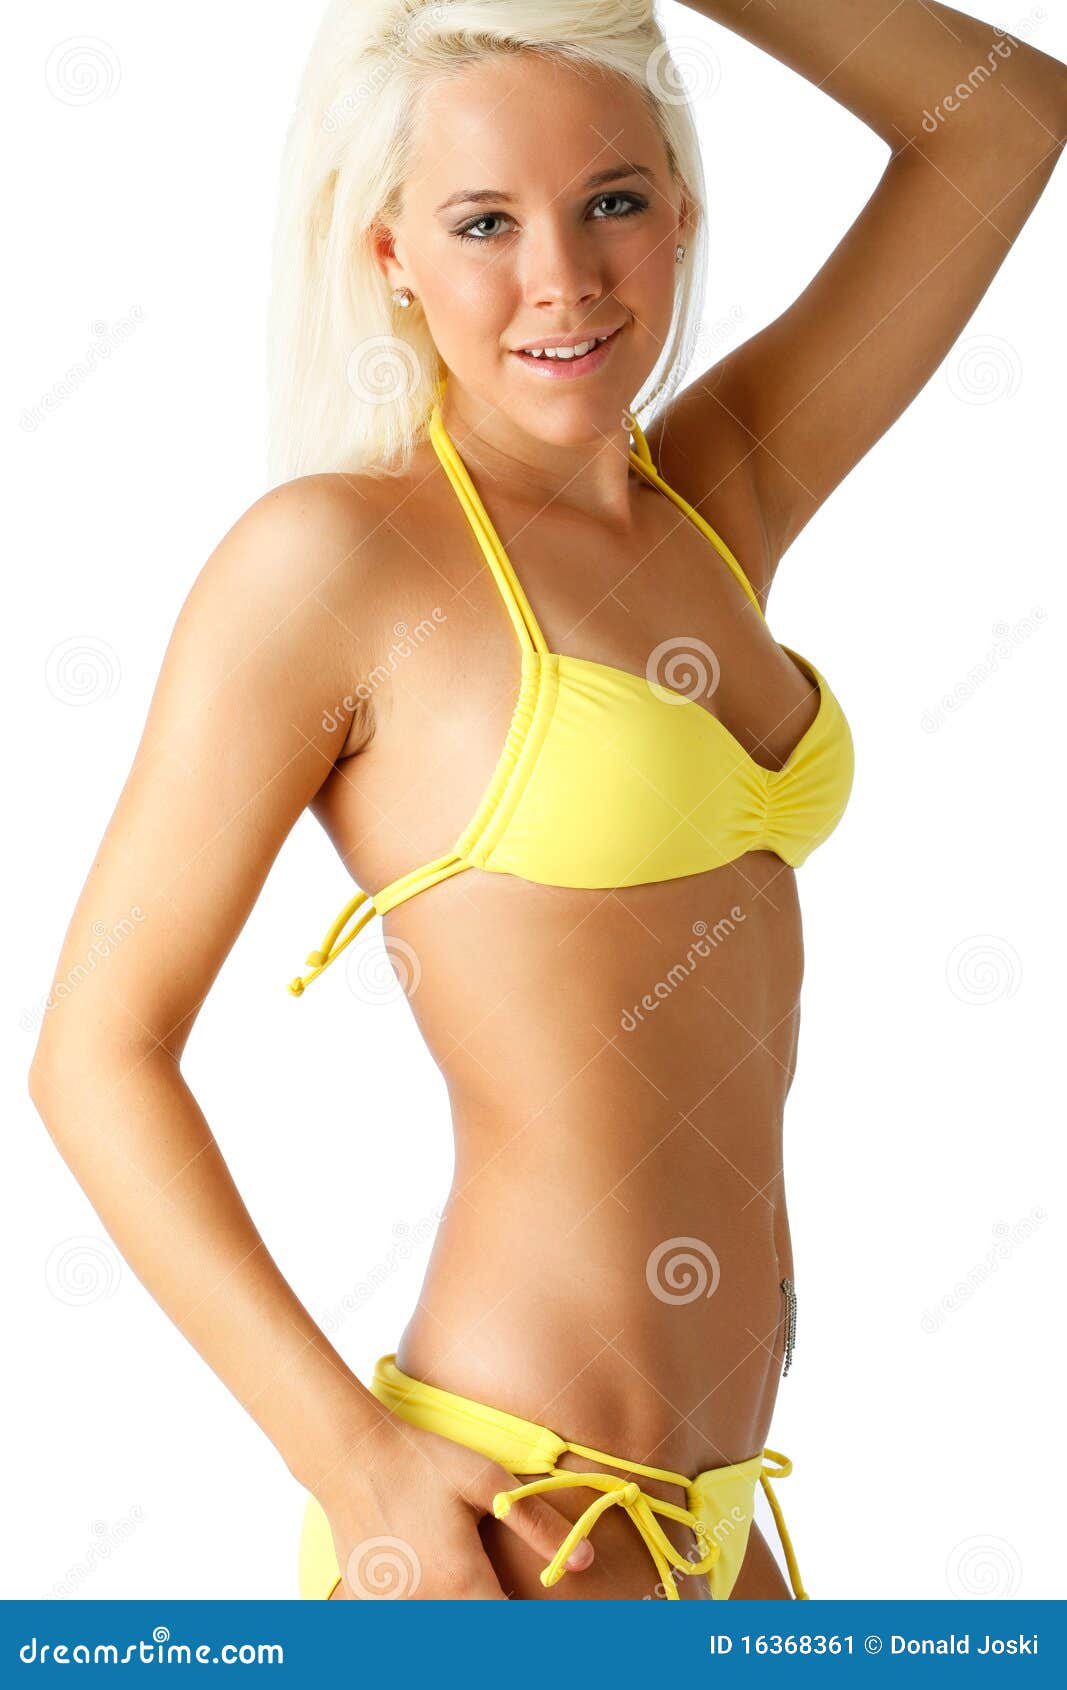 Blonde Bikini Fashion Stock Image - Image: 16368361